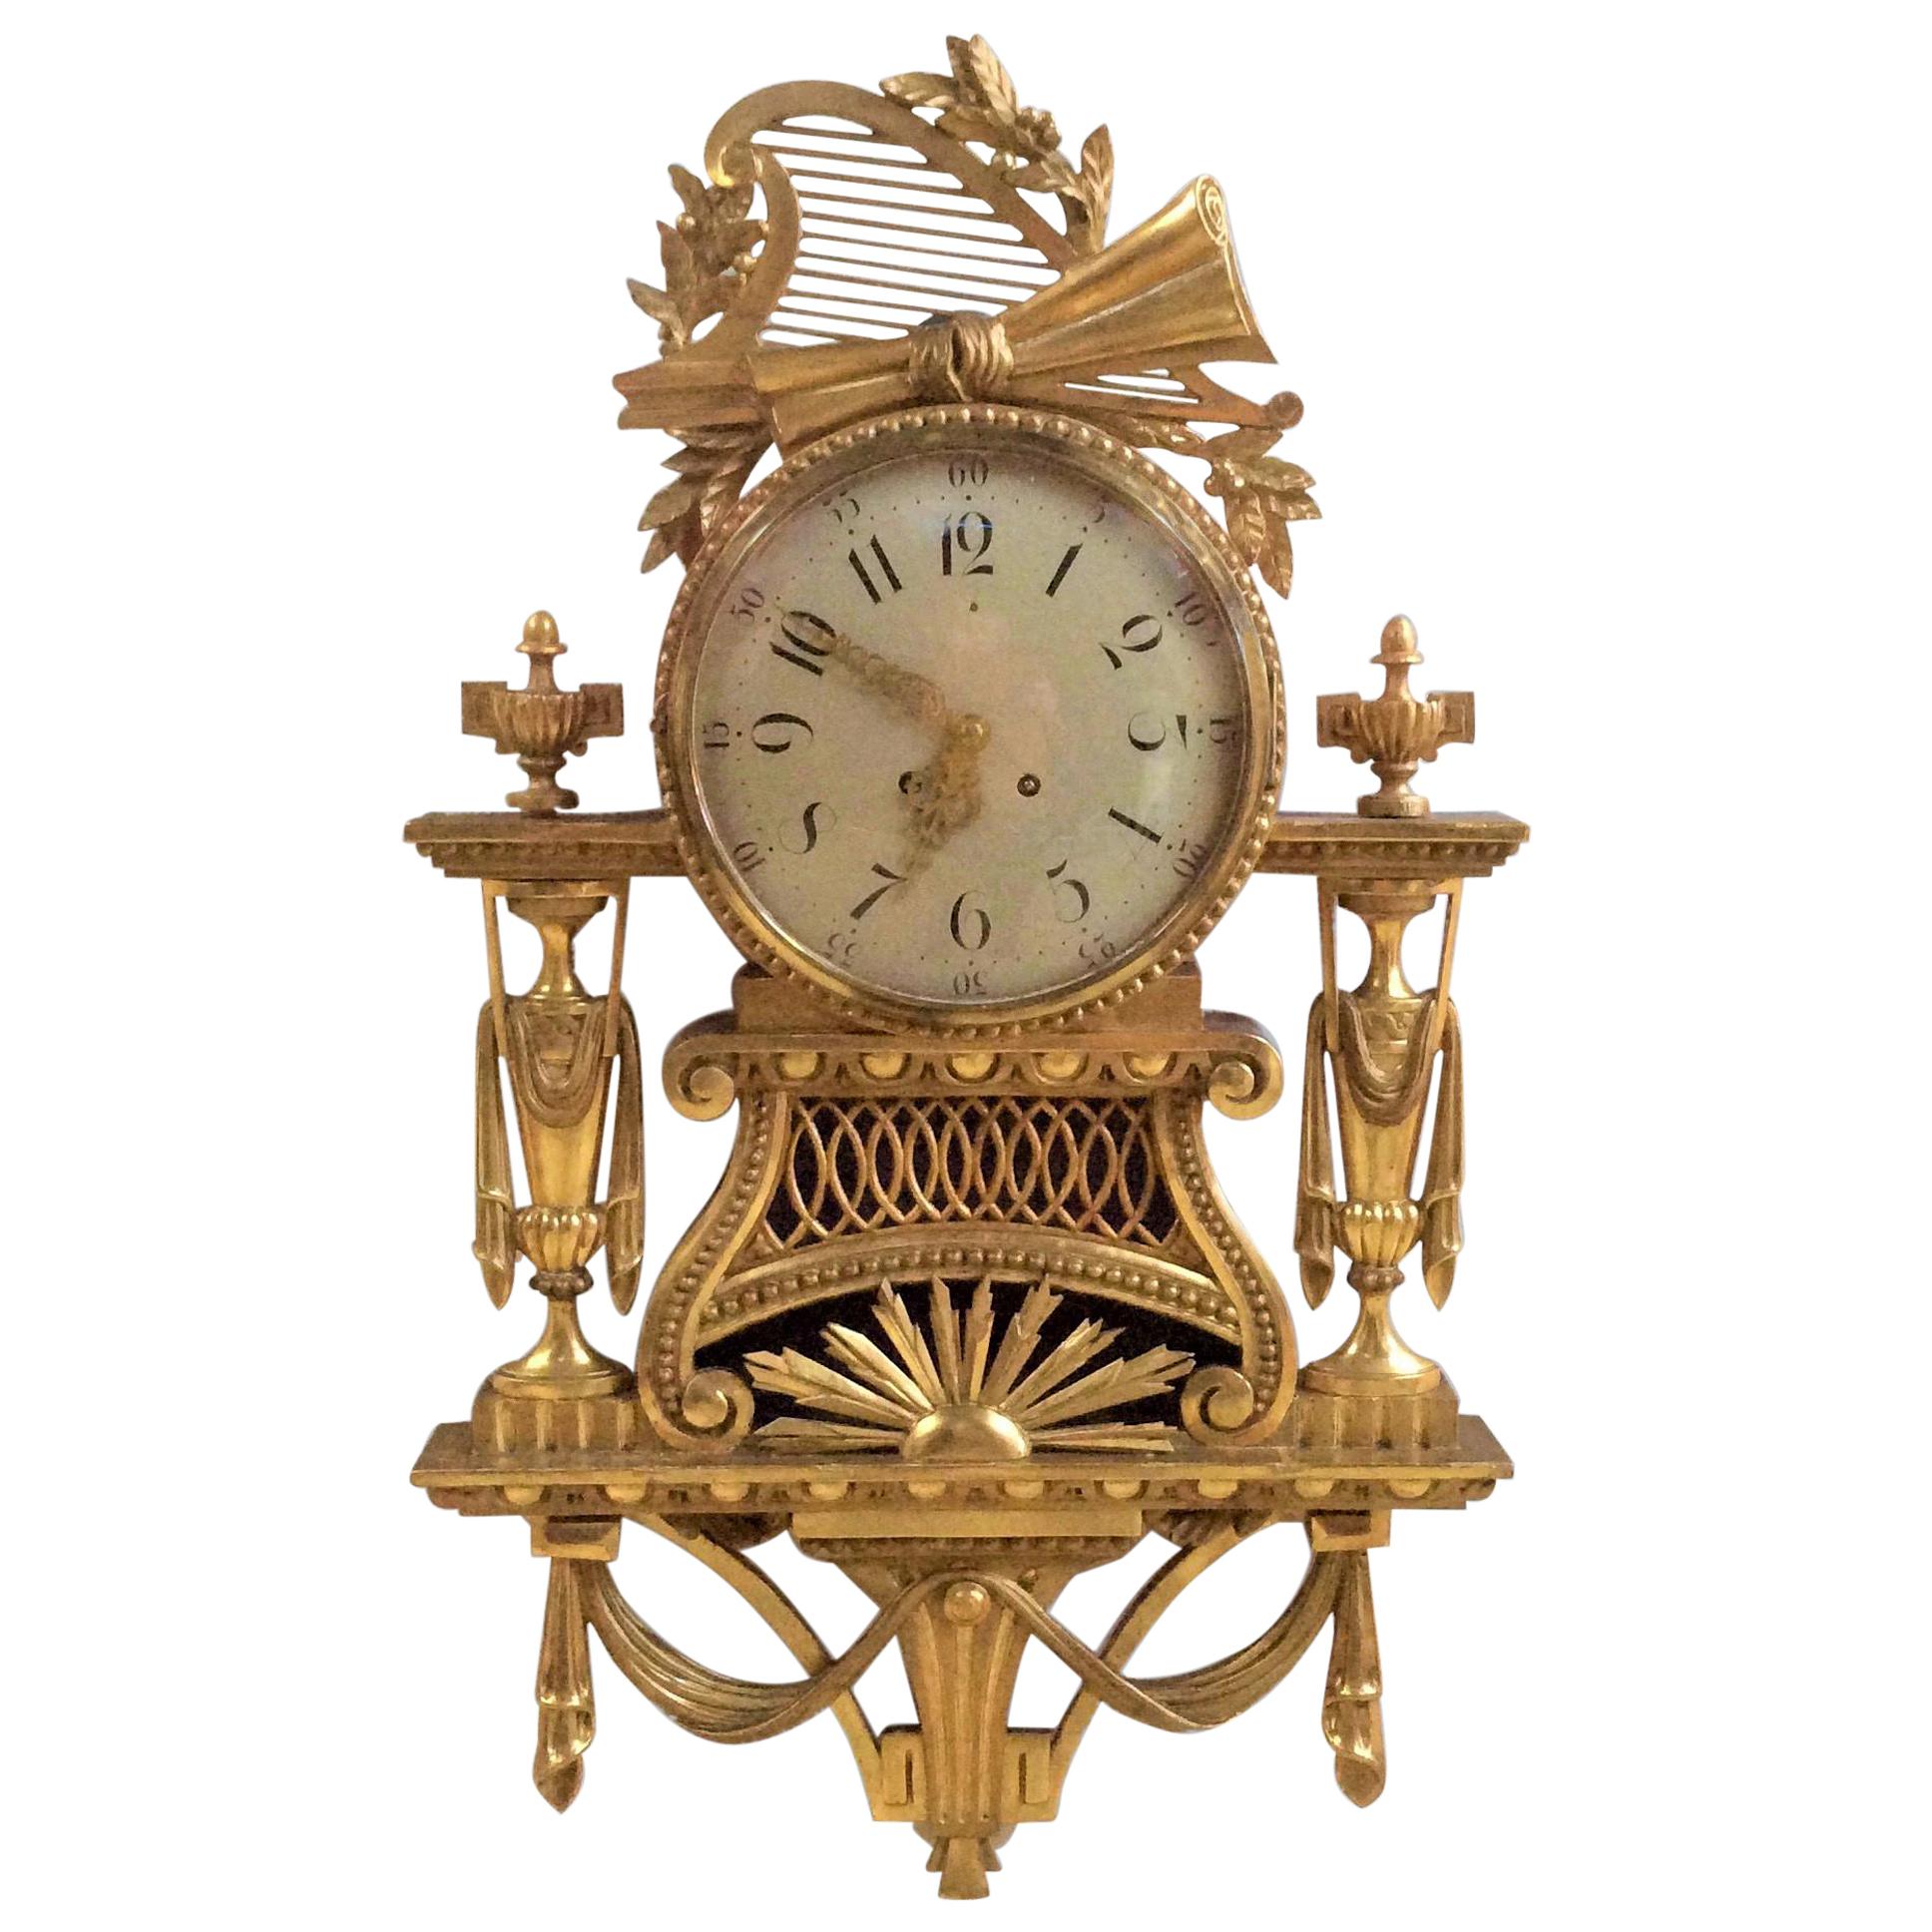 When were Gustav Becker clocks made?